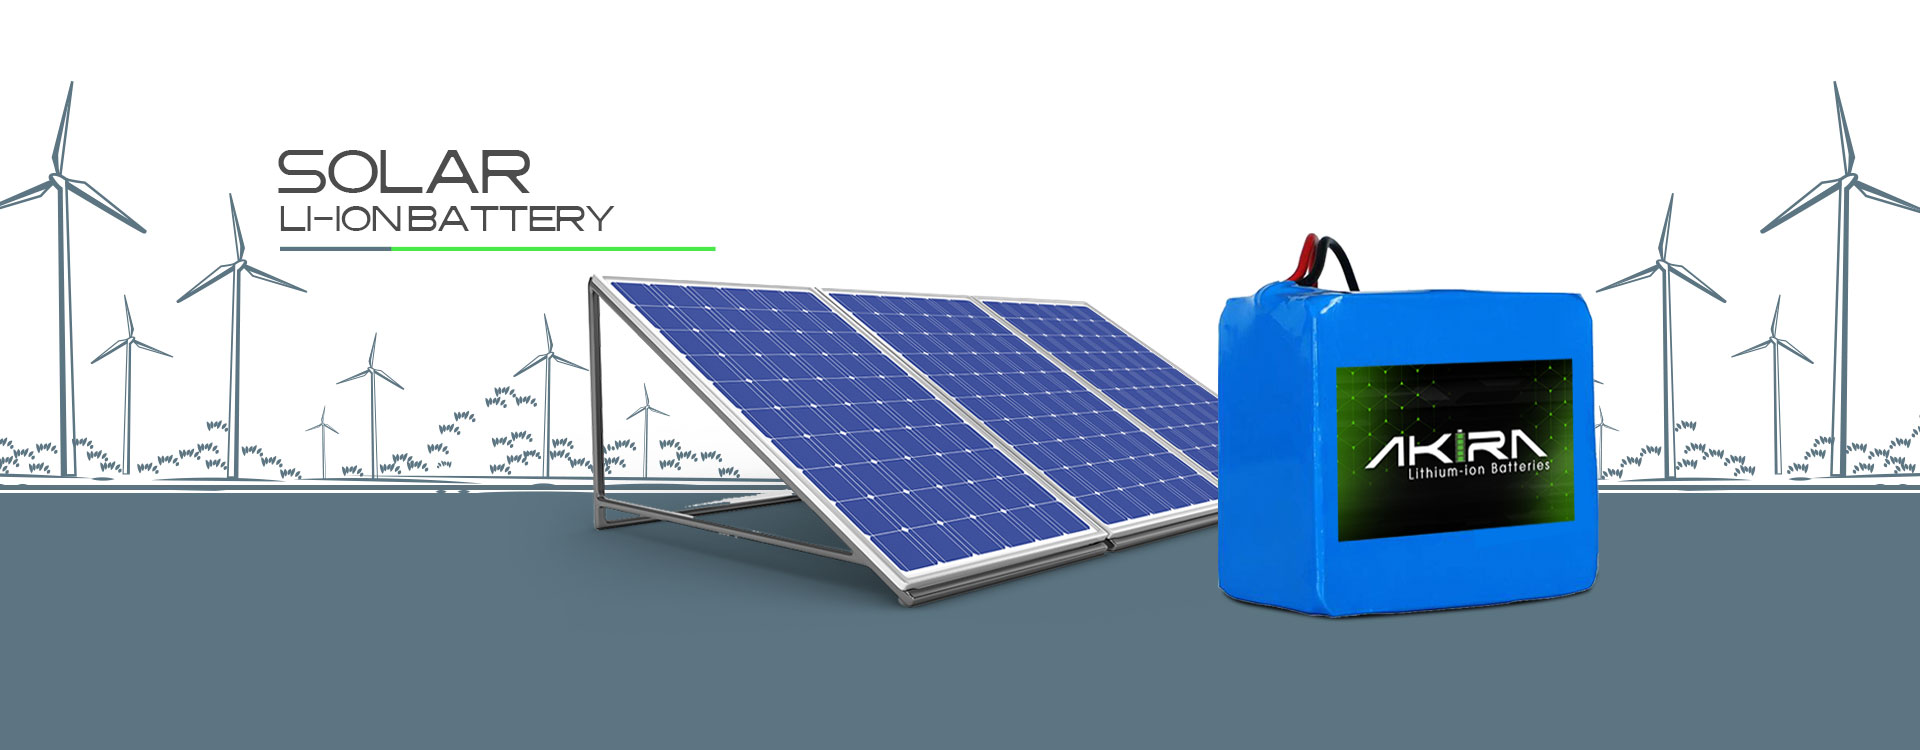 Solar Li-ion Battery 